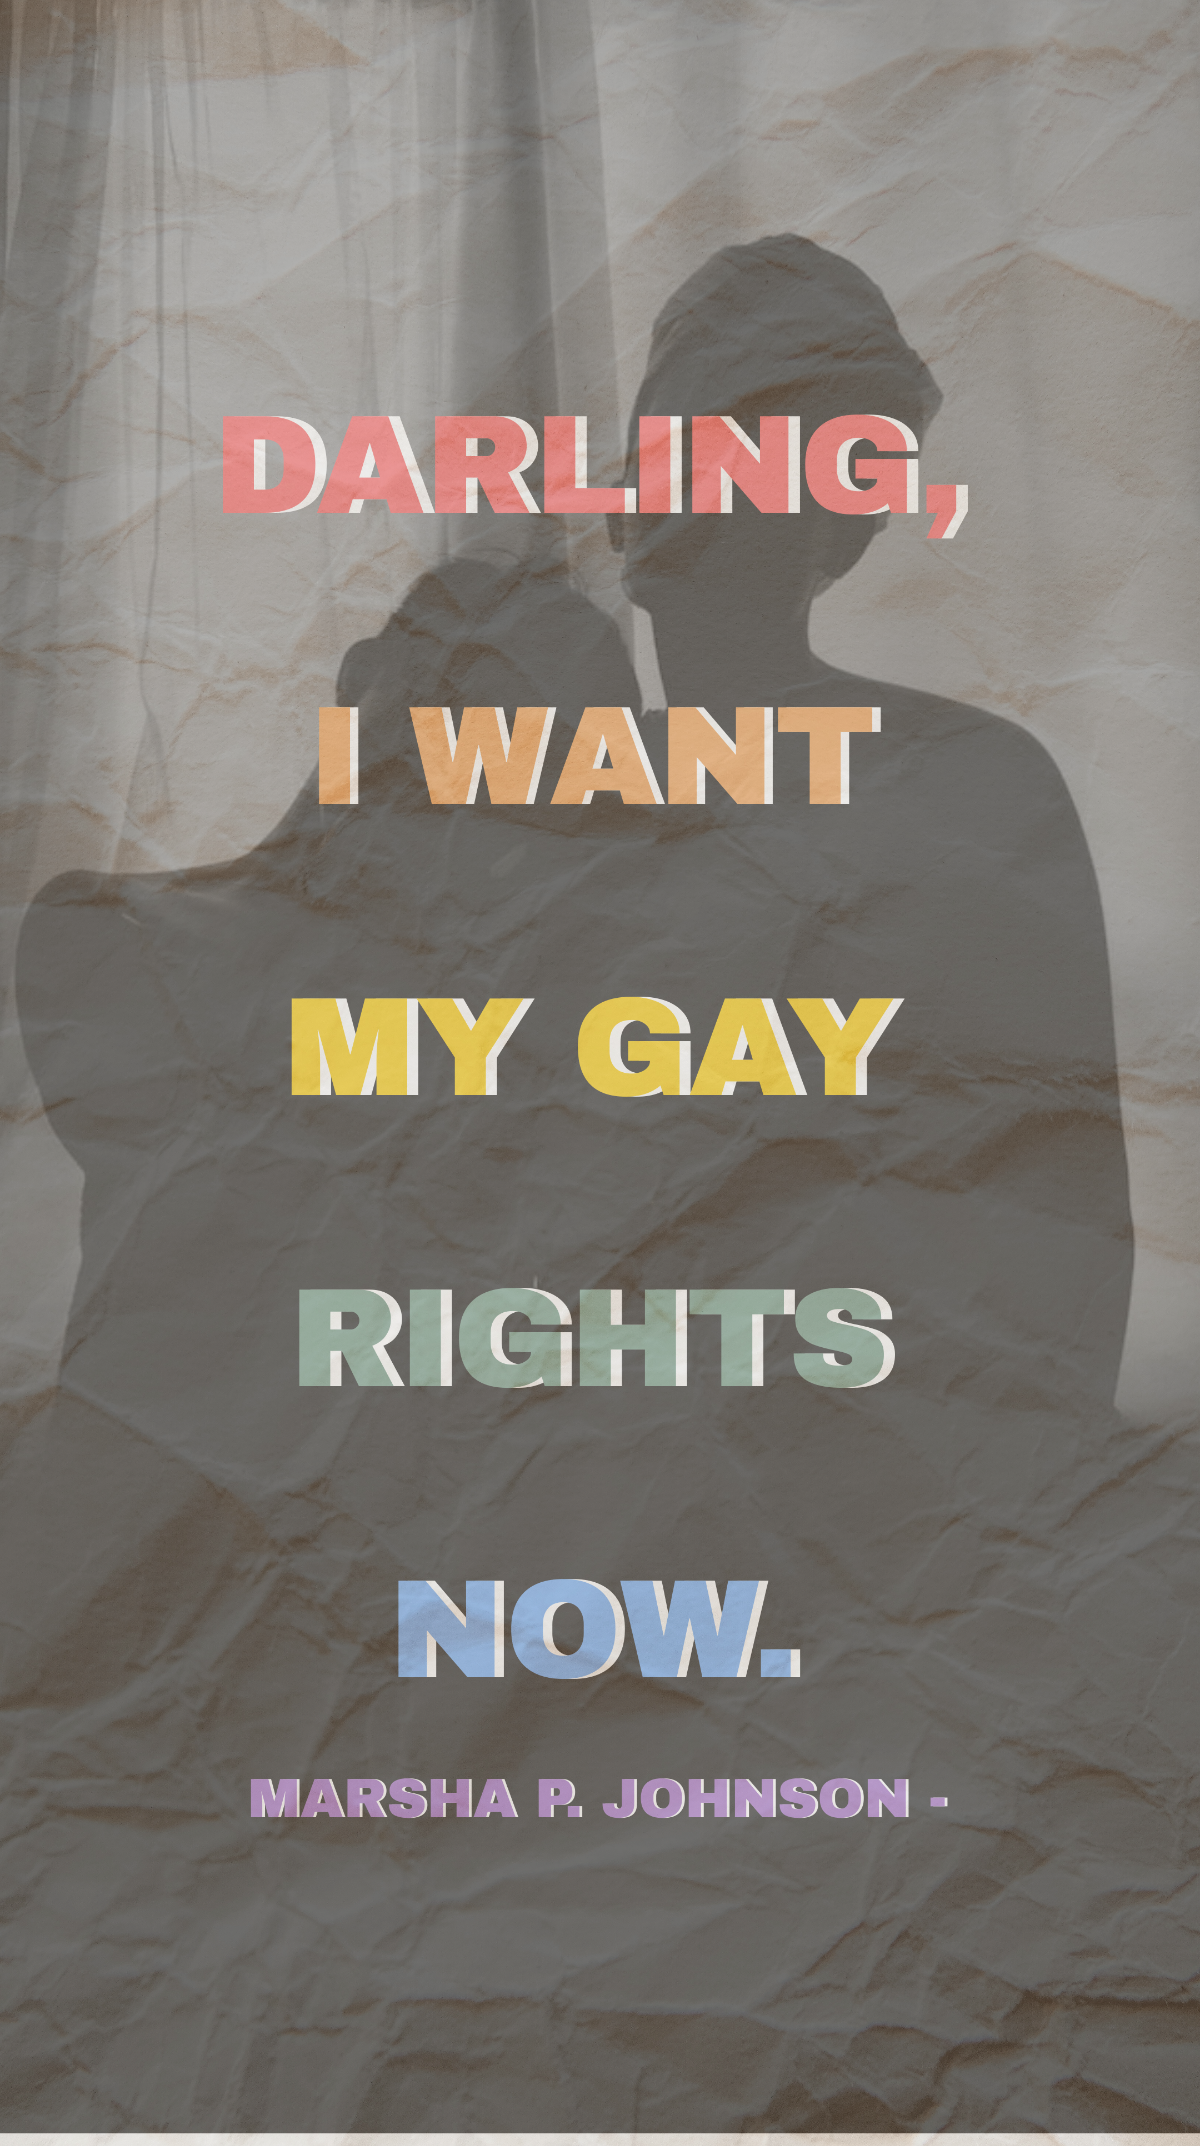 Marsha P. Johnson - Darling, I want my gay rights now. Template